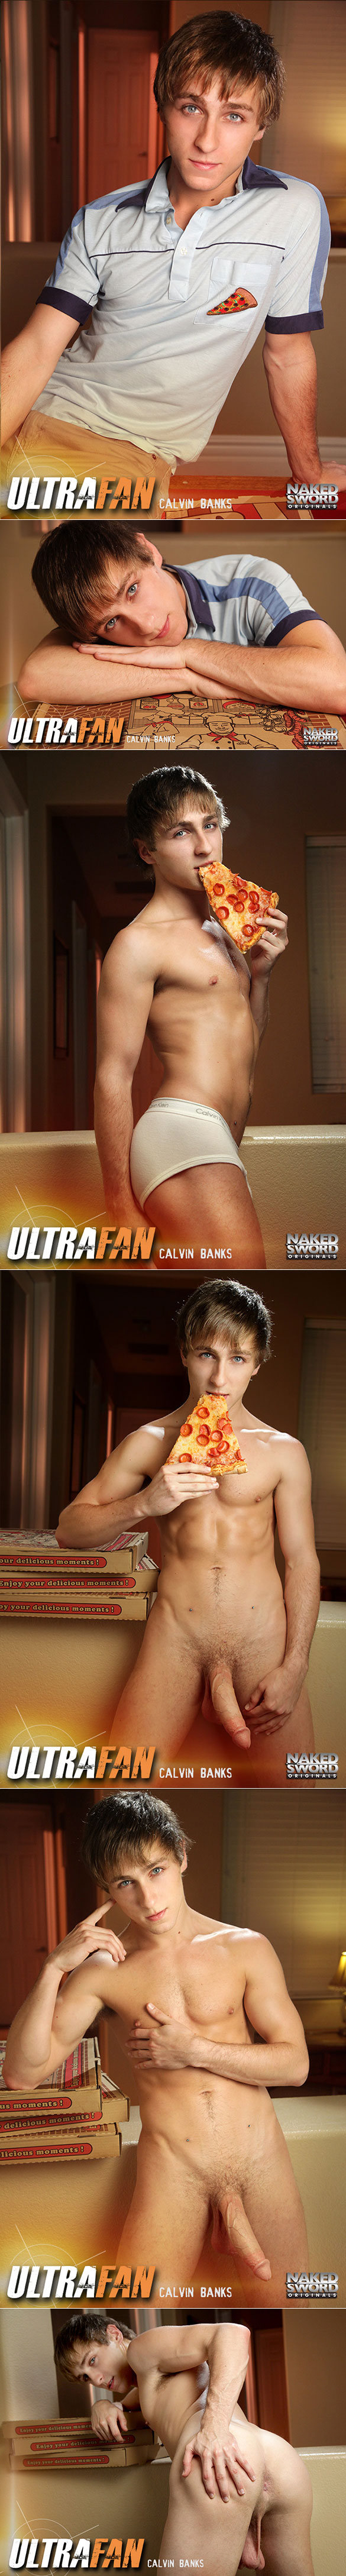 NakedSword Originals: Brent Corrigan and Calvin Banks in "Ultra Fan: Scene 1 - Extra Sausage"